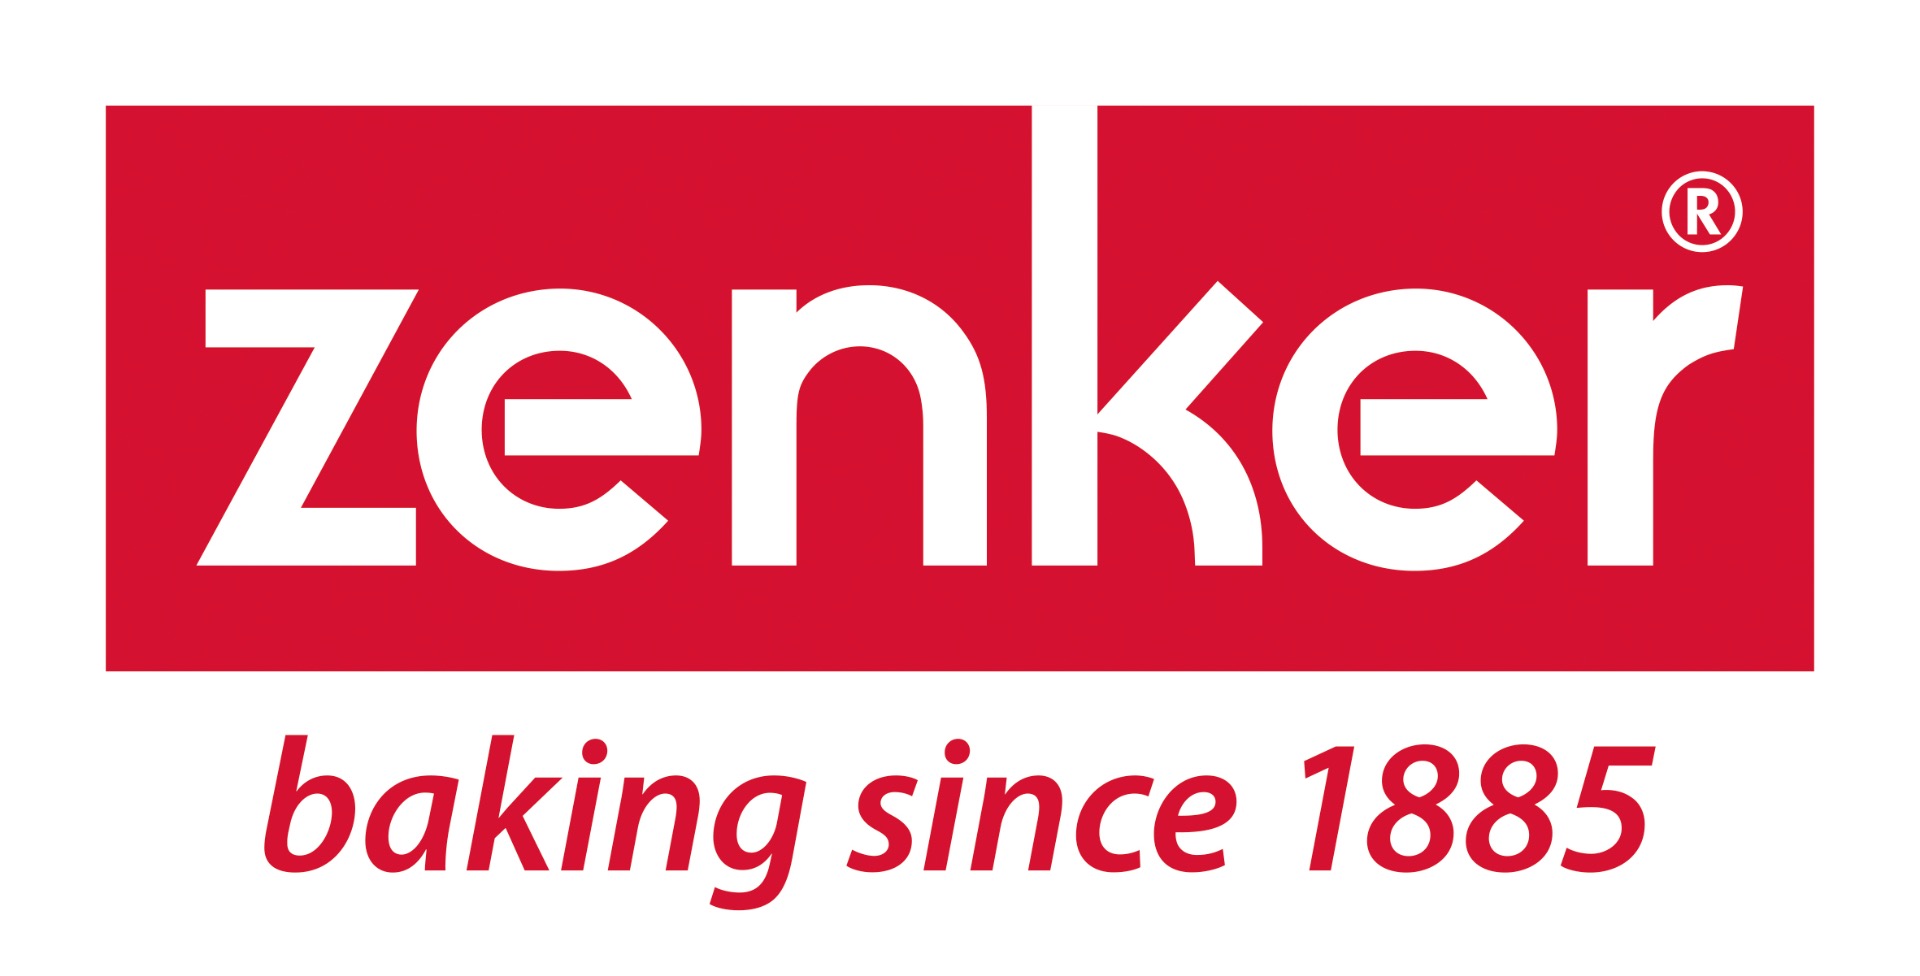 Zenker_Logo_baking_since_1885